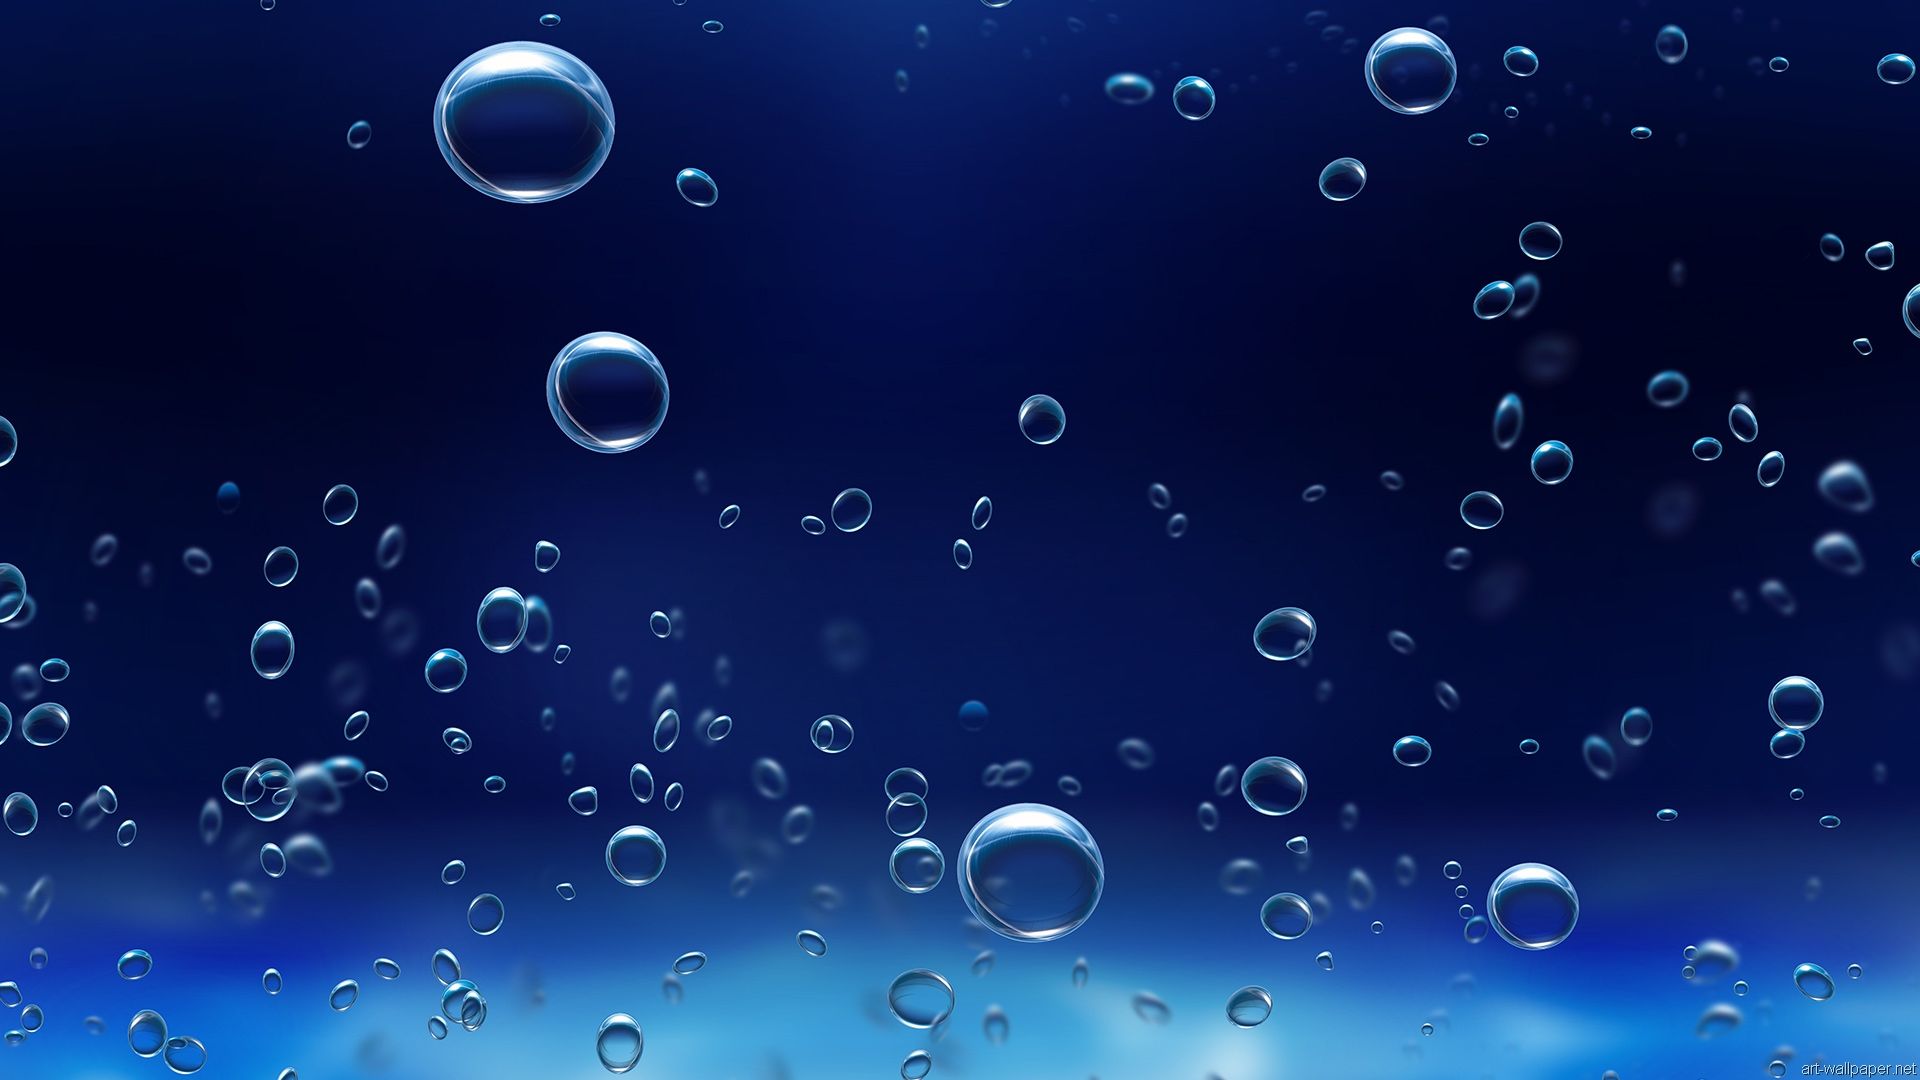 Full Hd Desktop Wallpapers Group - Underwater Bubbles Background -  1920x1080 Wallpaper 